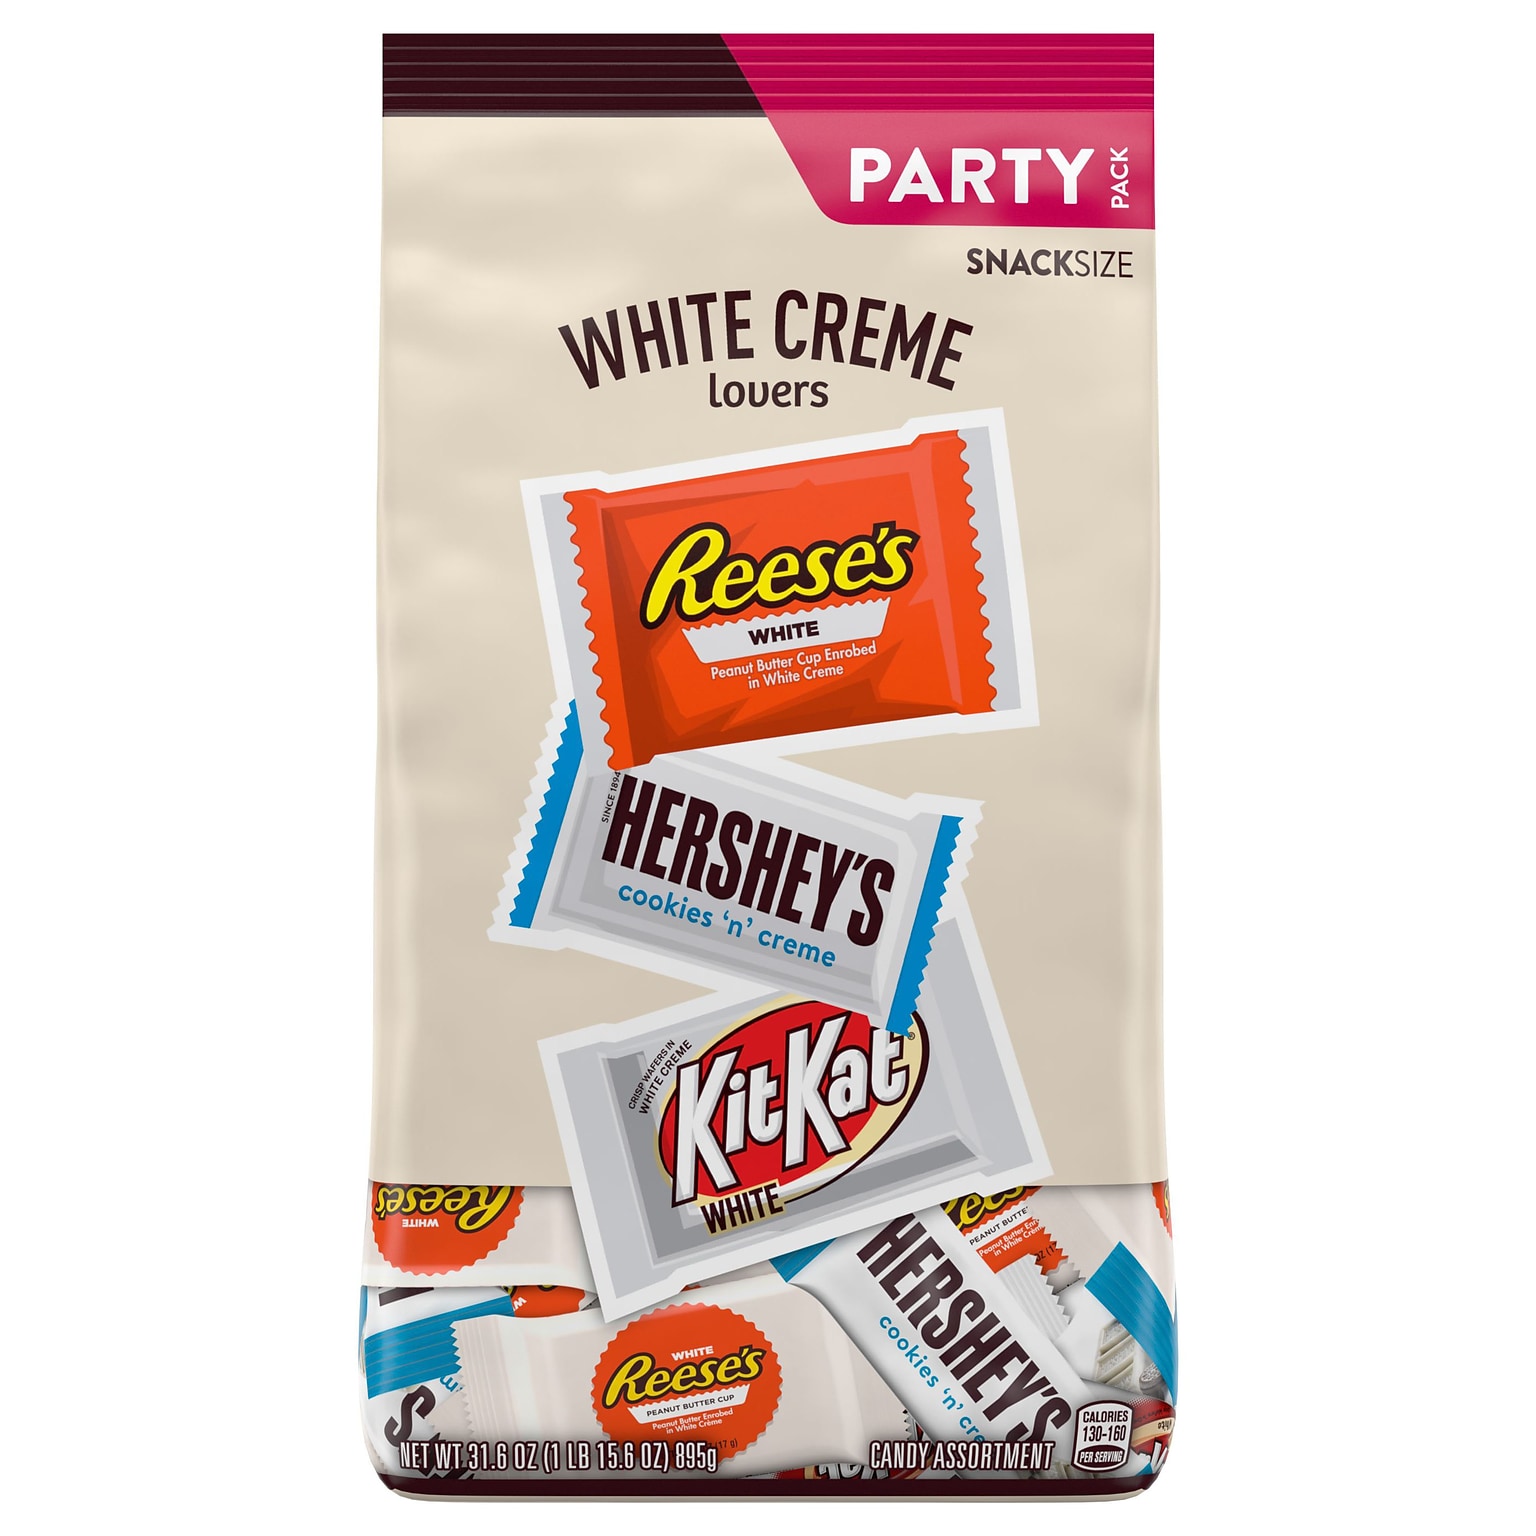 Hersheys Whie Crème Lovers Snack Size Reeses, Hersheys & KiKat White Chocolate Candy Bar, 31.6 oz. (246-00353)